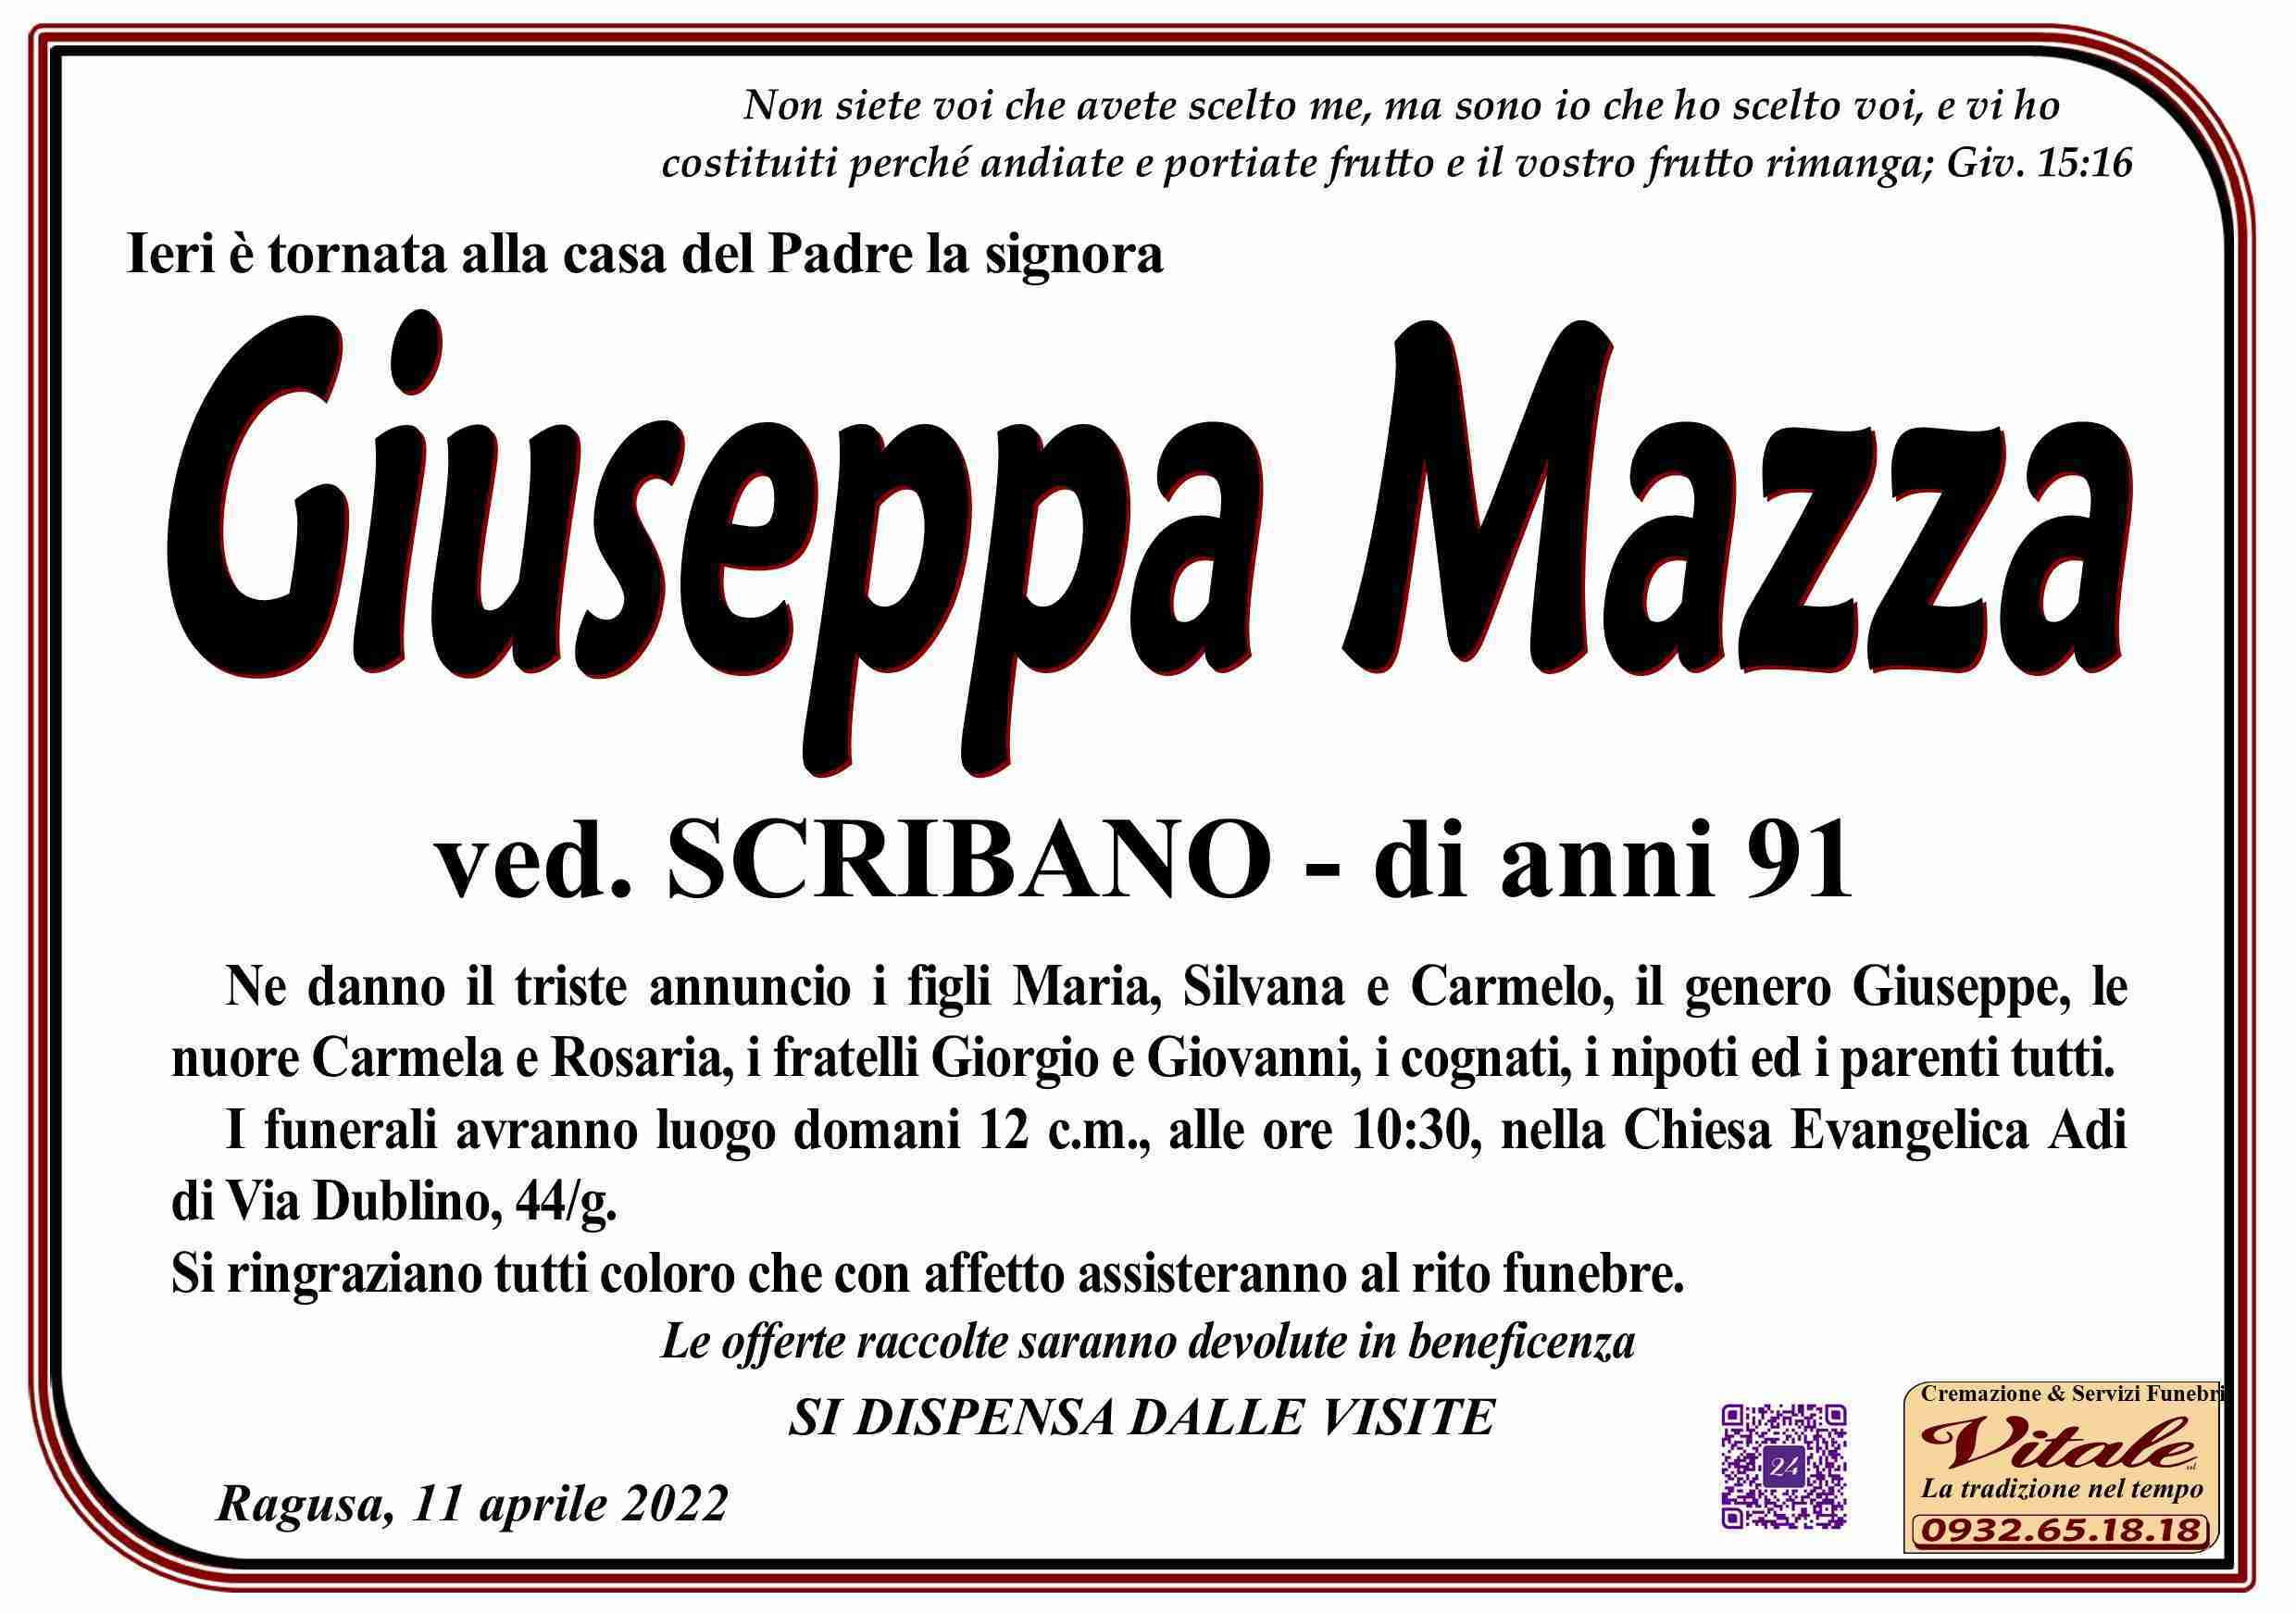 Giuseppa Mazza